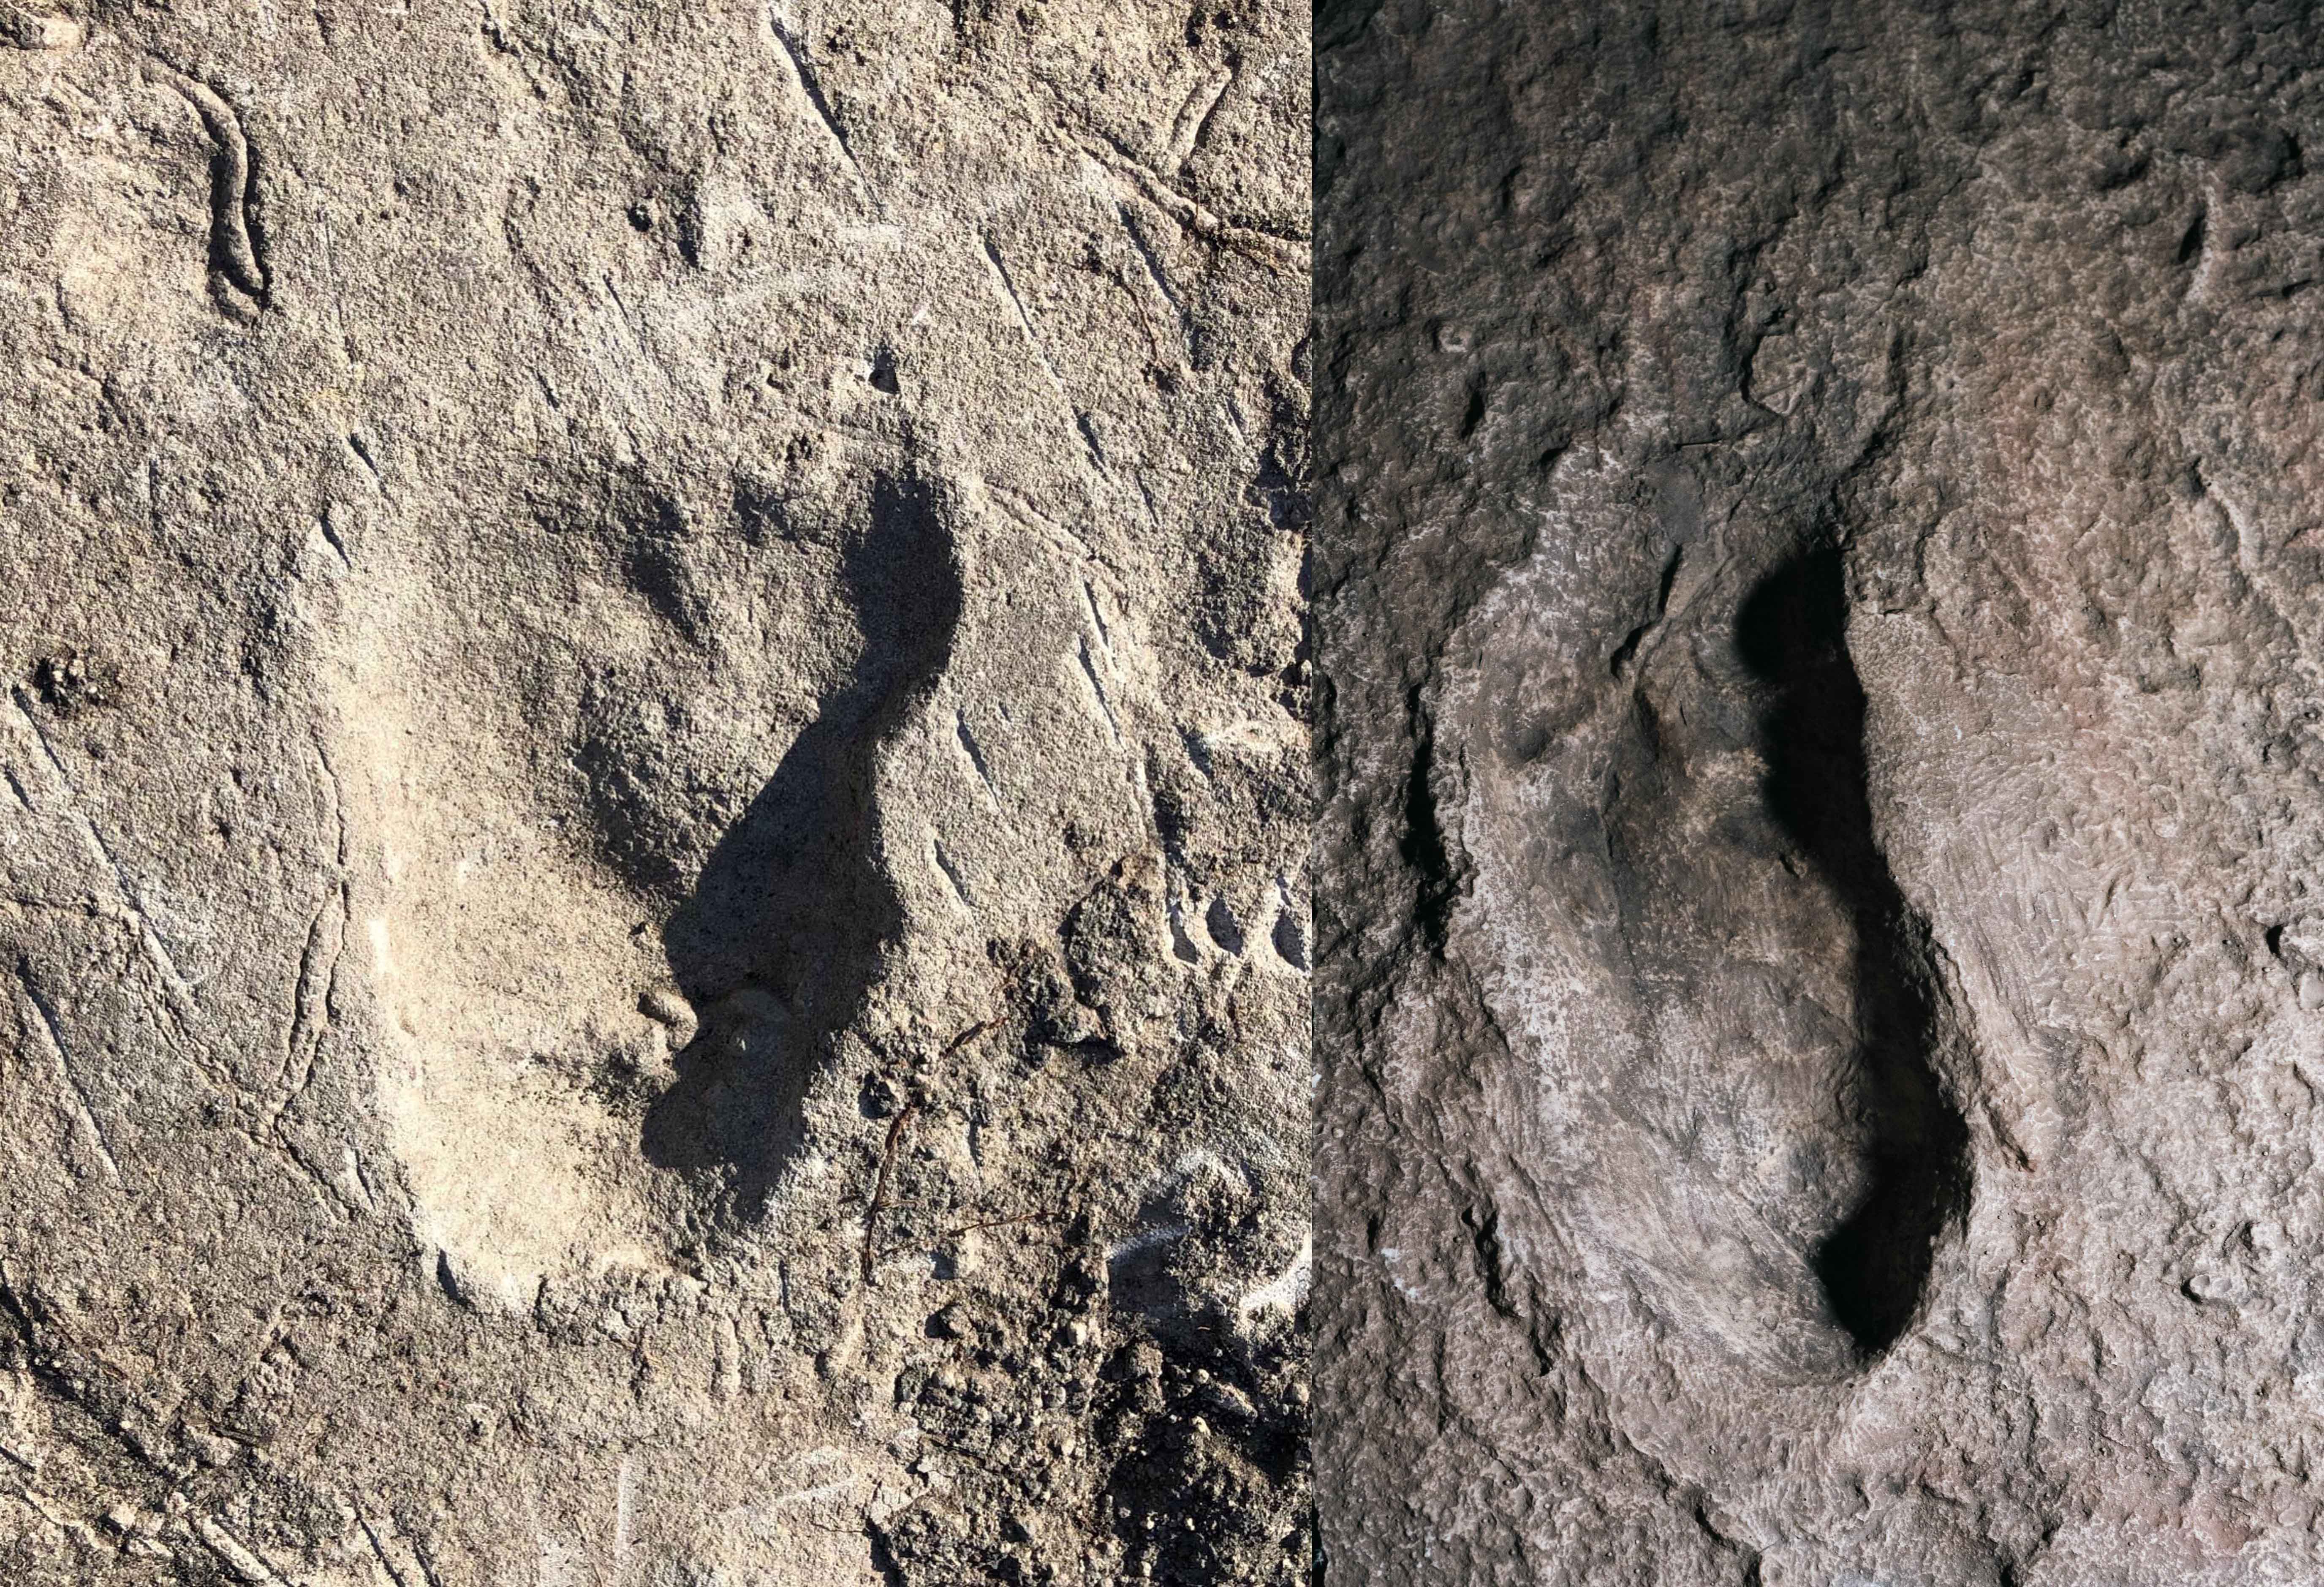 Images of Laetoli's footprint